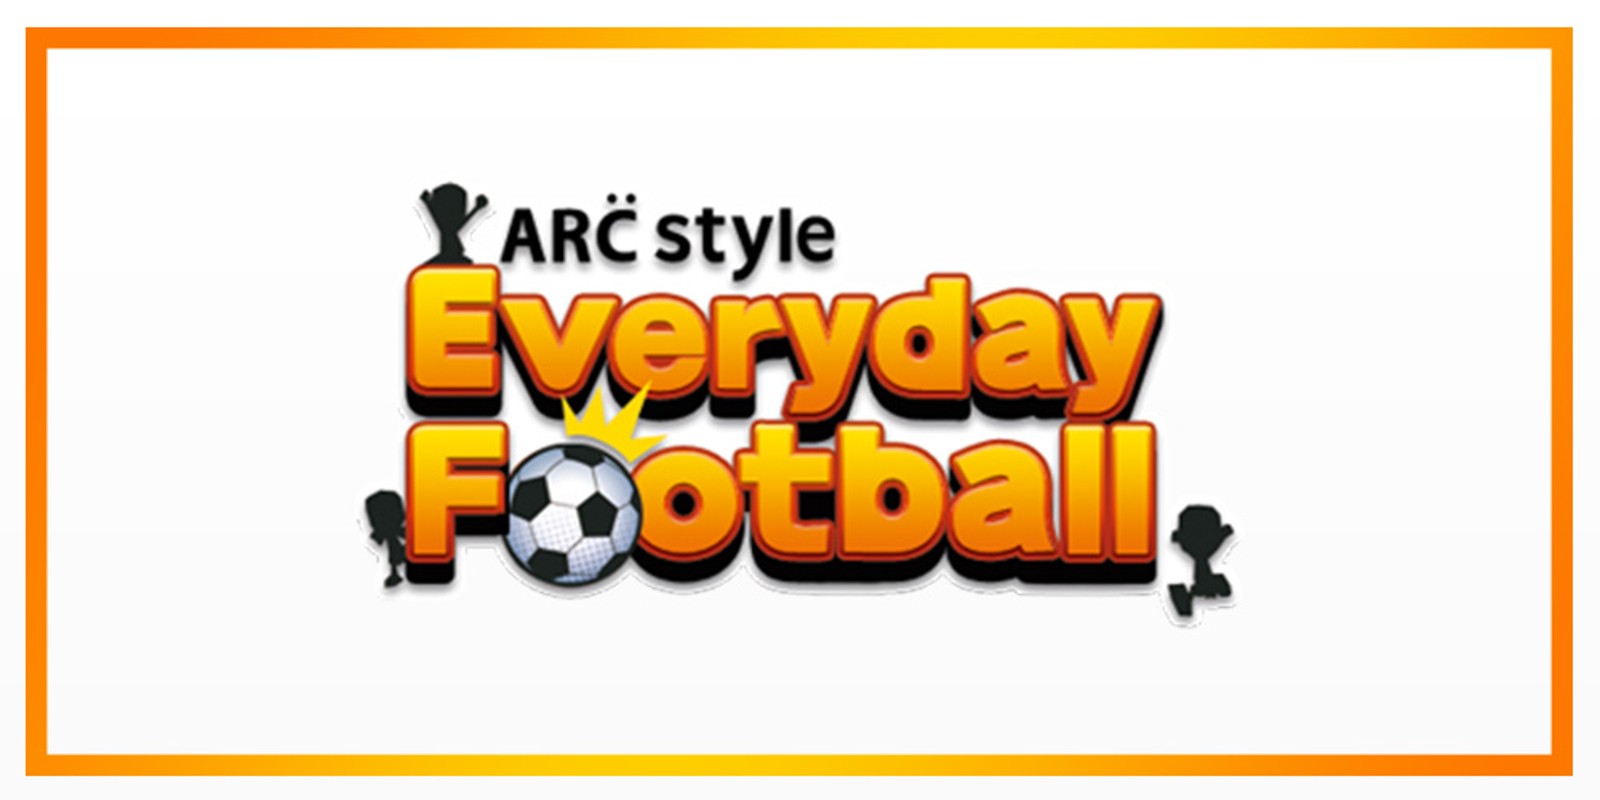 ARC STYLE: Everyday Football